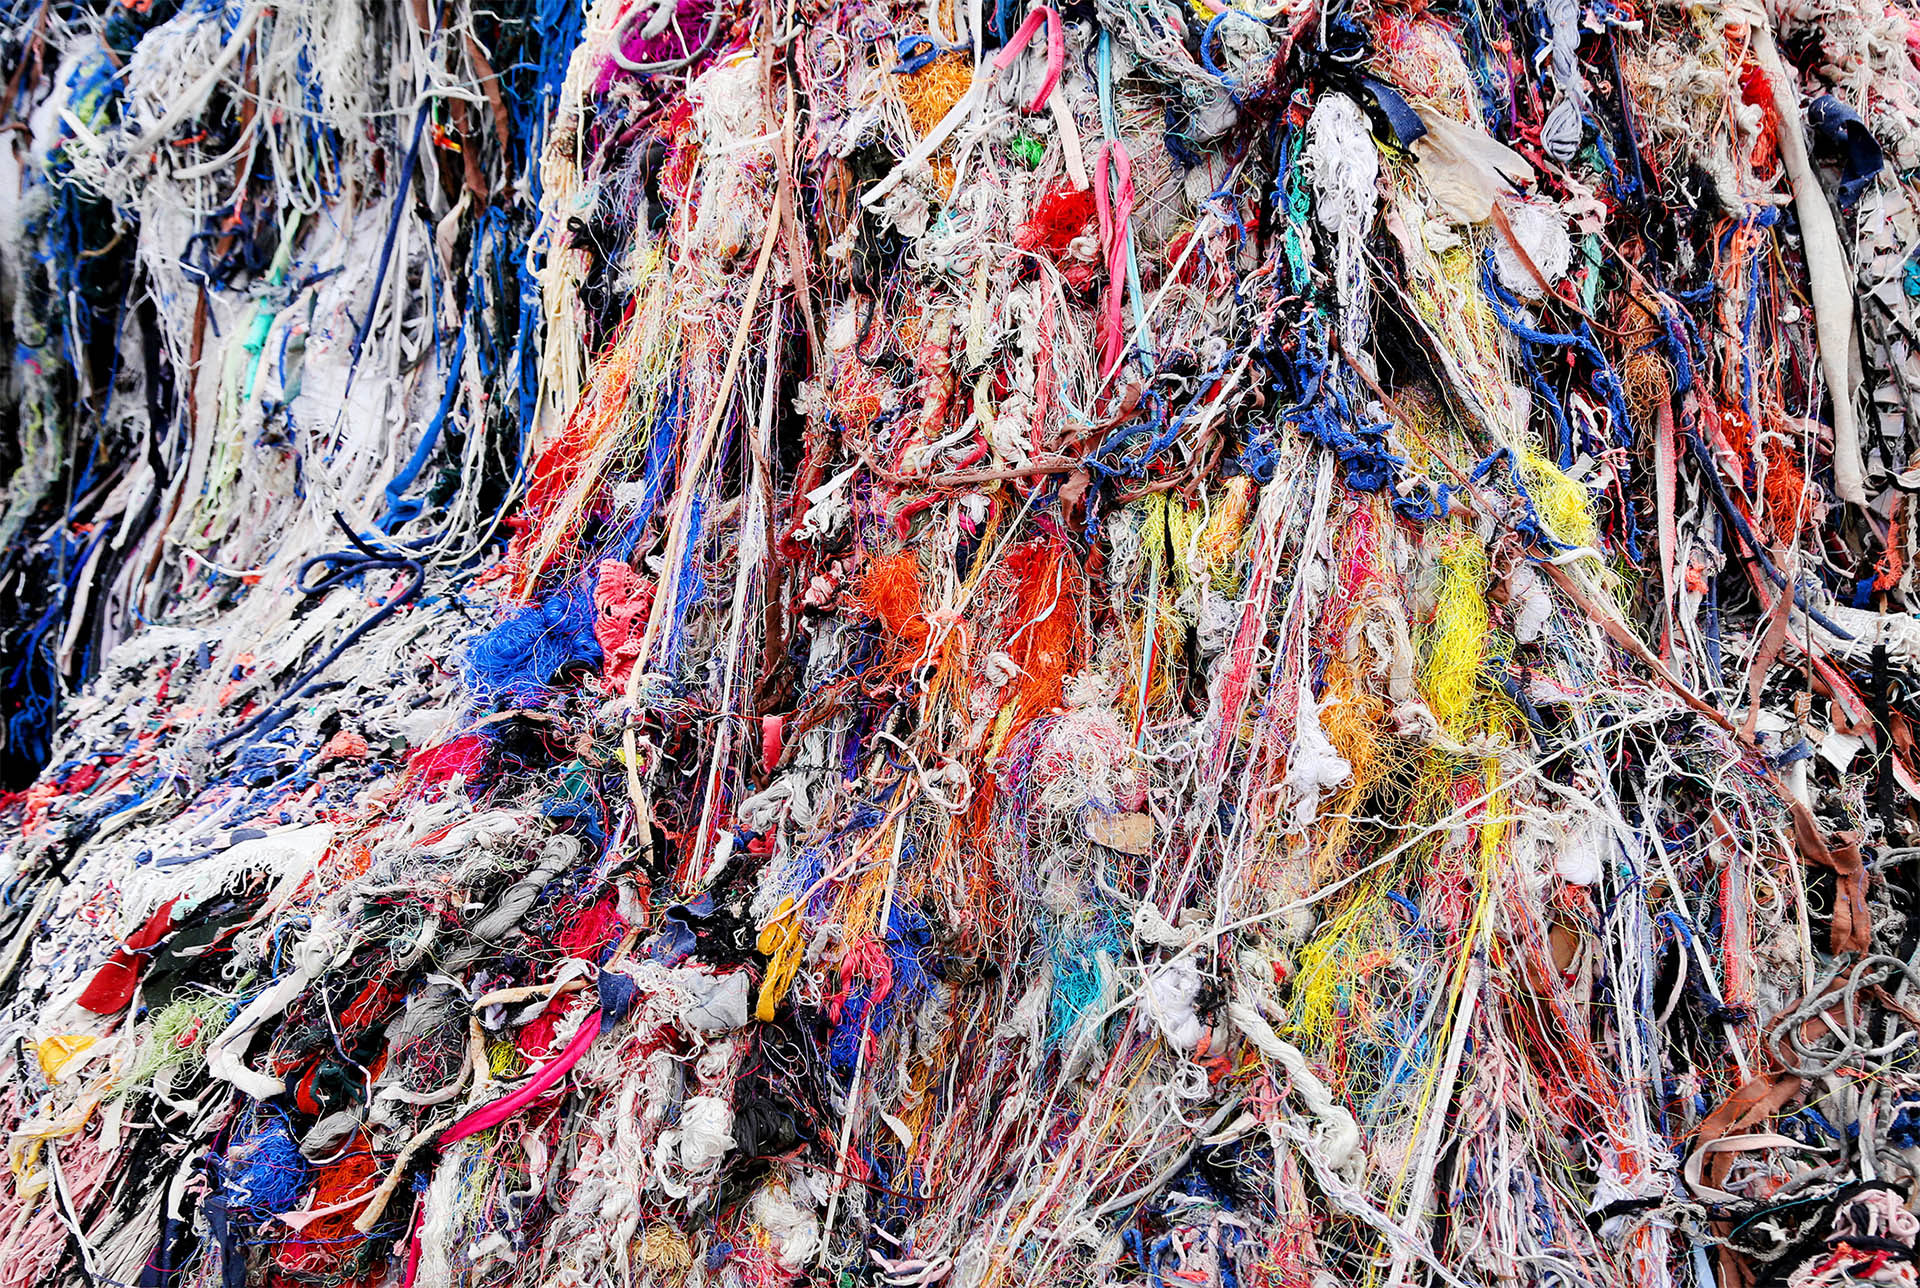 Textile waste in Bangladesh